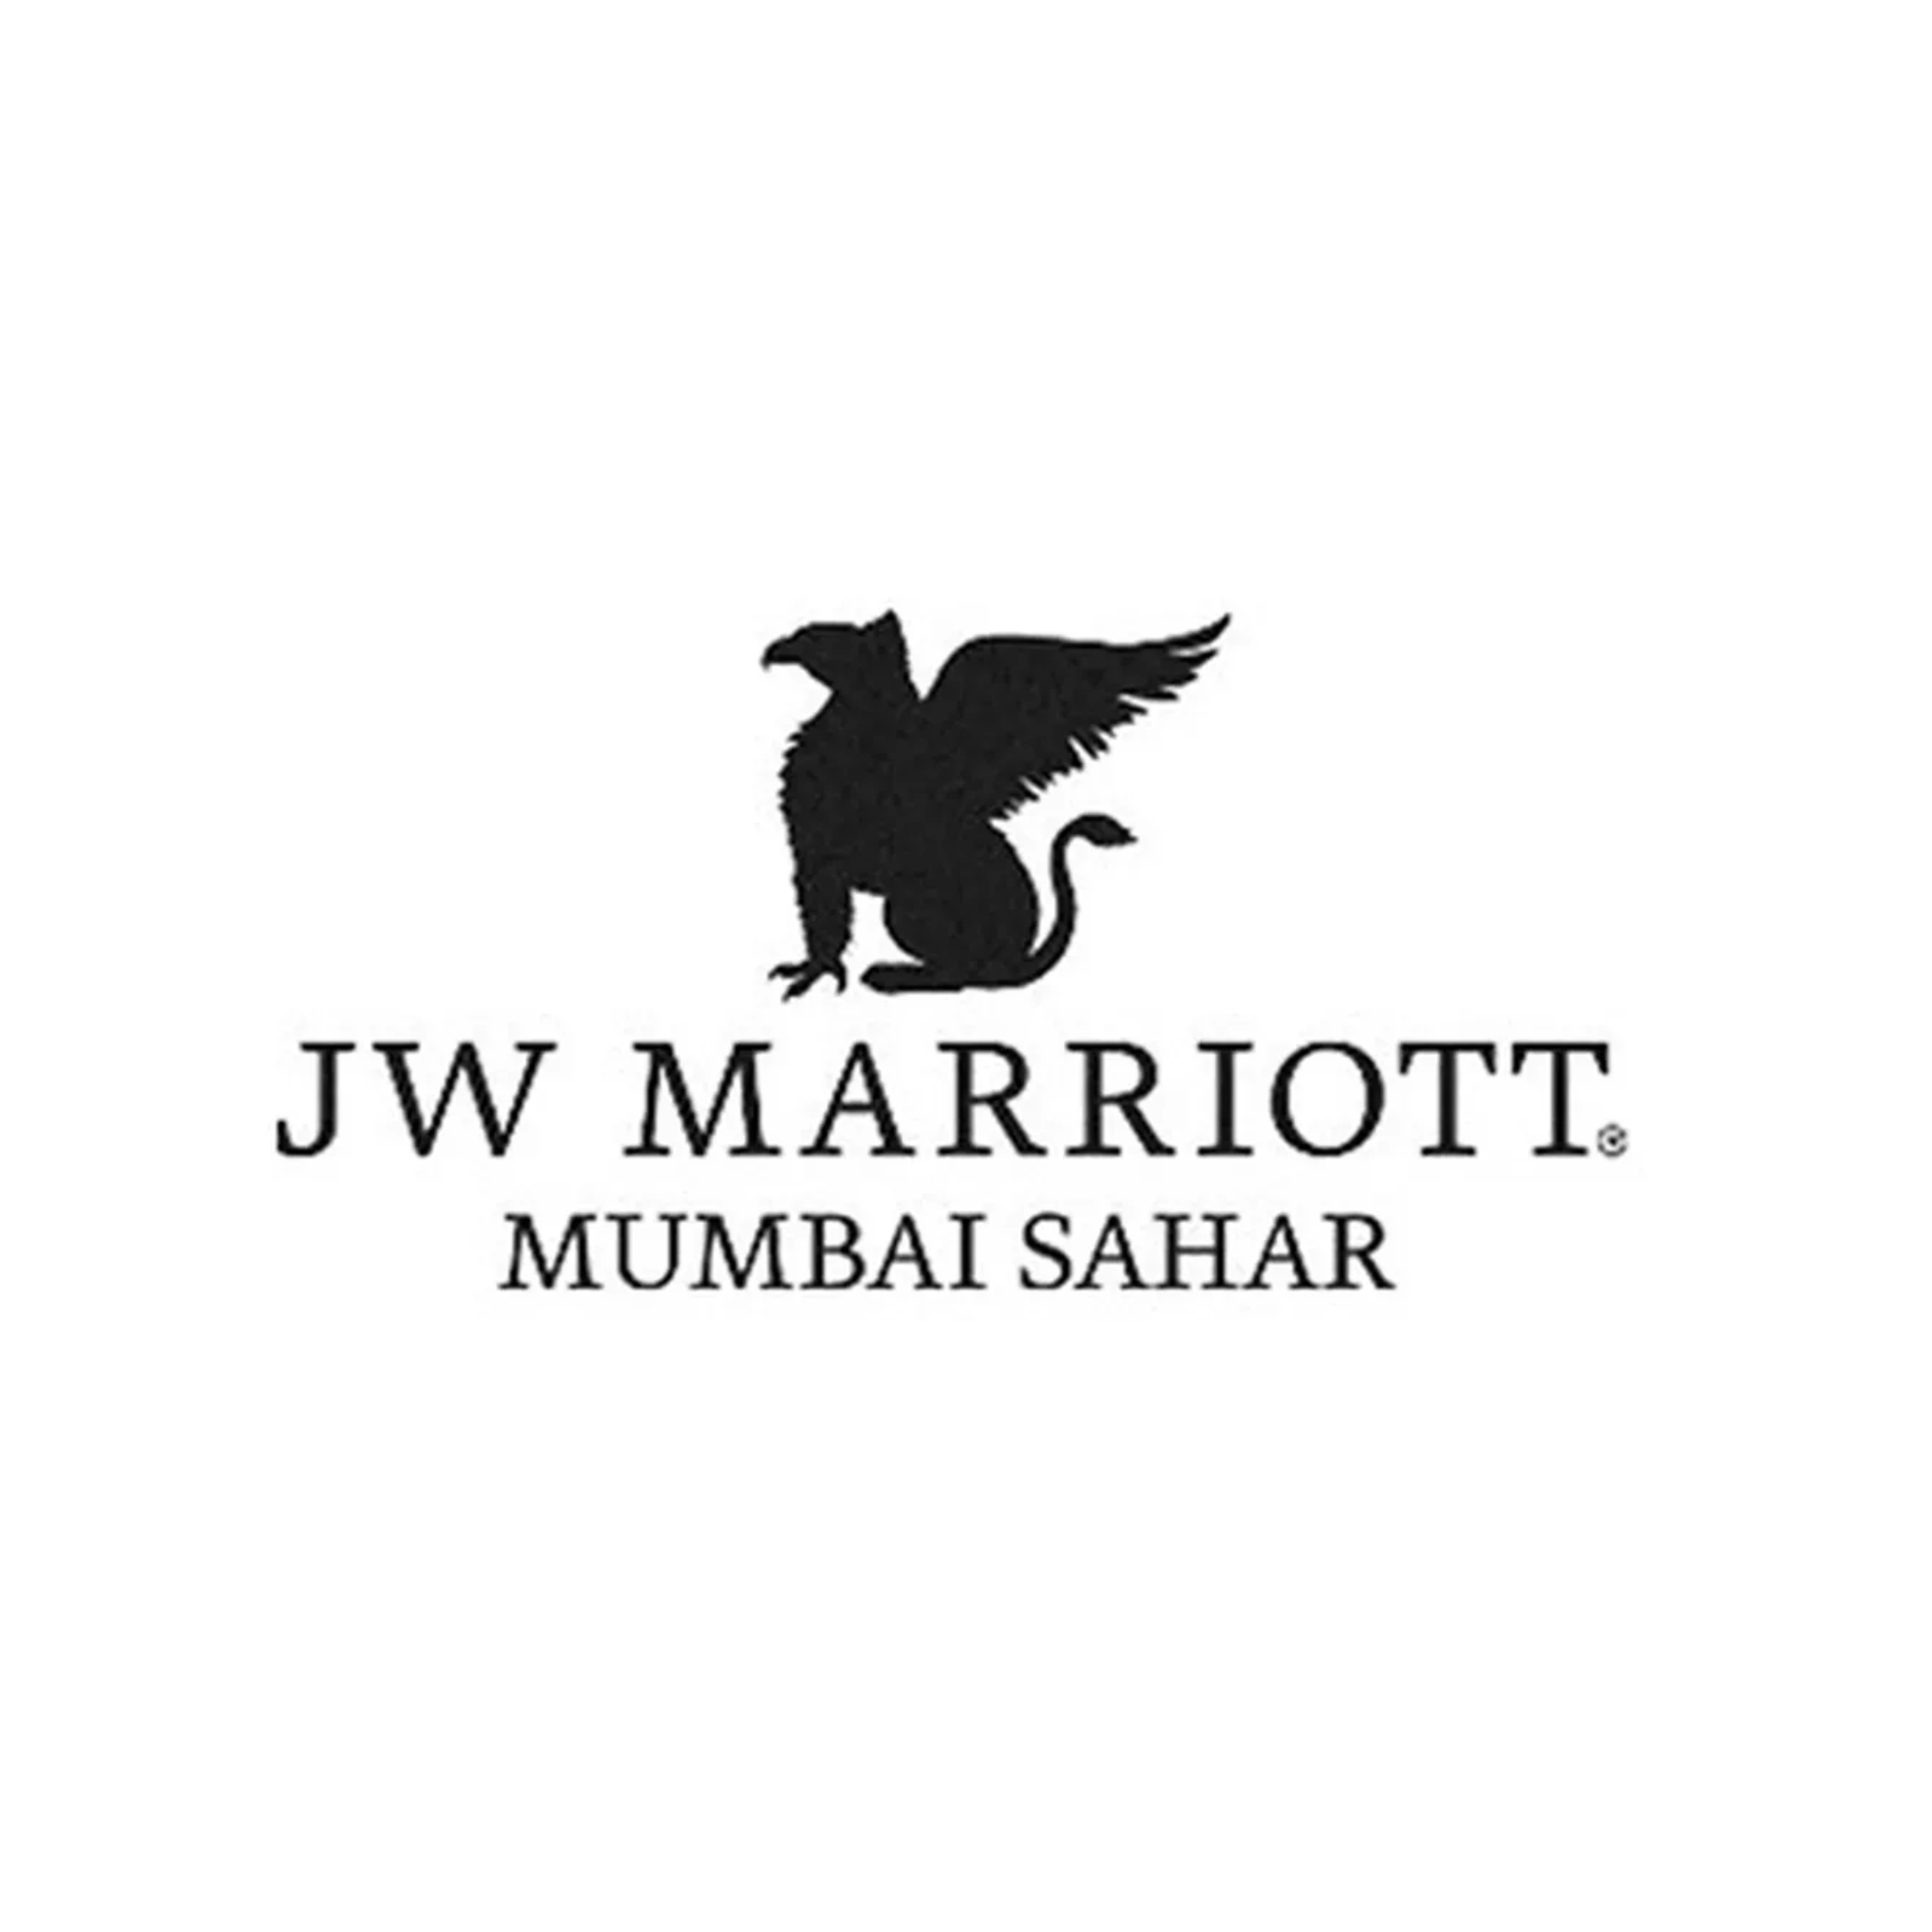 JW Marriott Mumbai Sahar Appoints Abanti Gupta as Director of Human Resources-thumnail